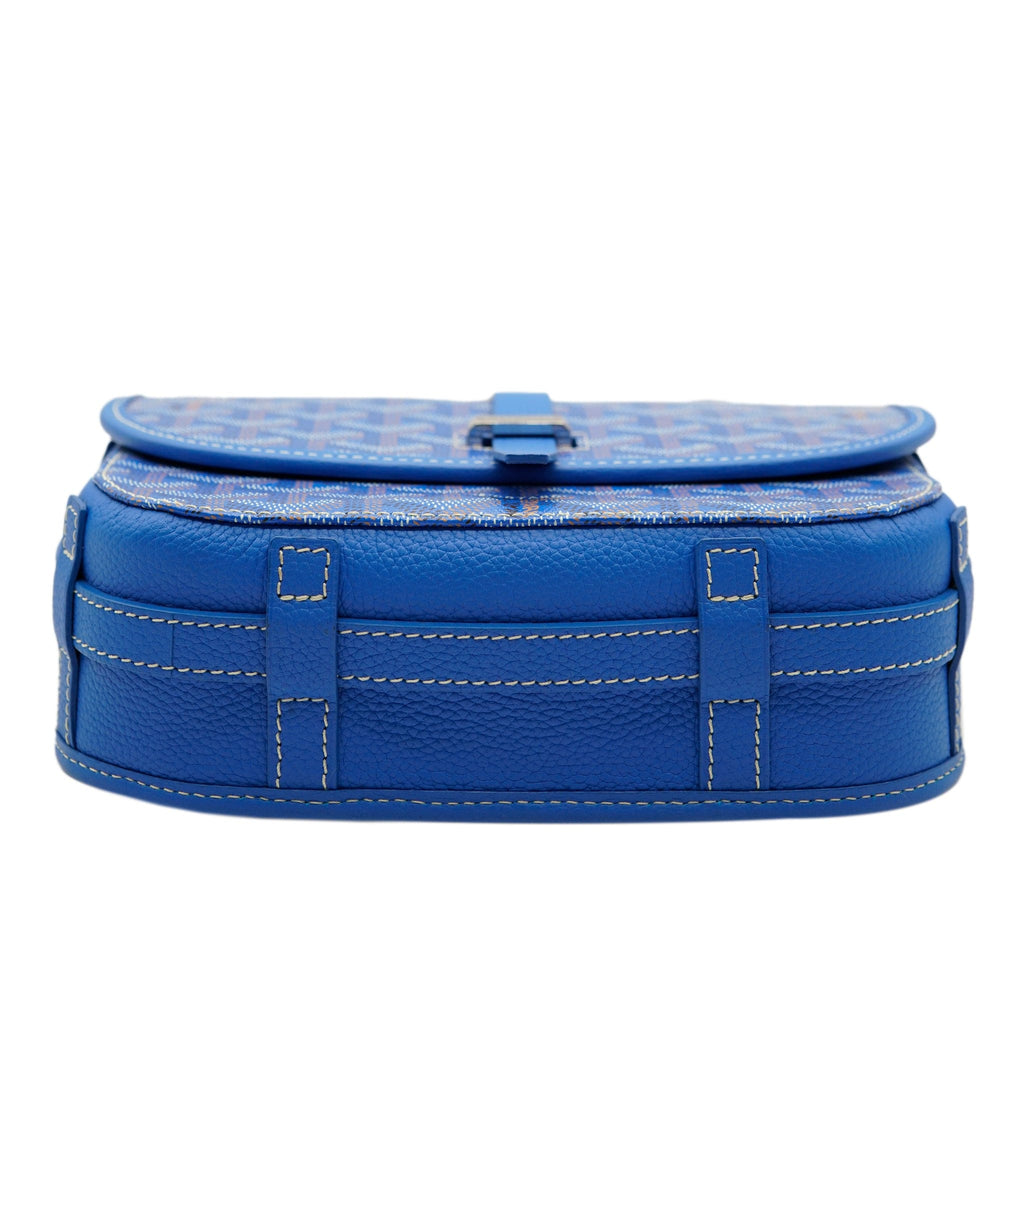 Goyard Belvedere PM Bag blue AVL1076